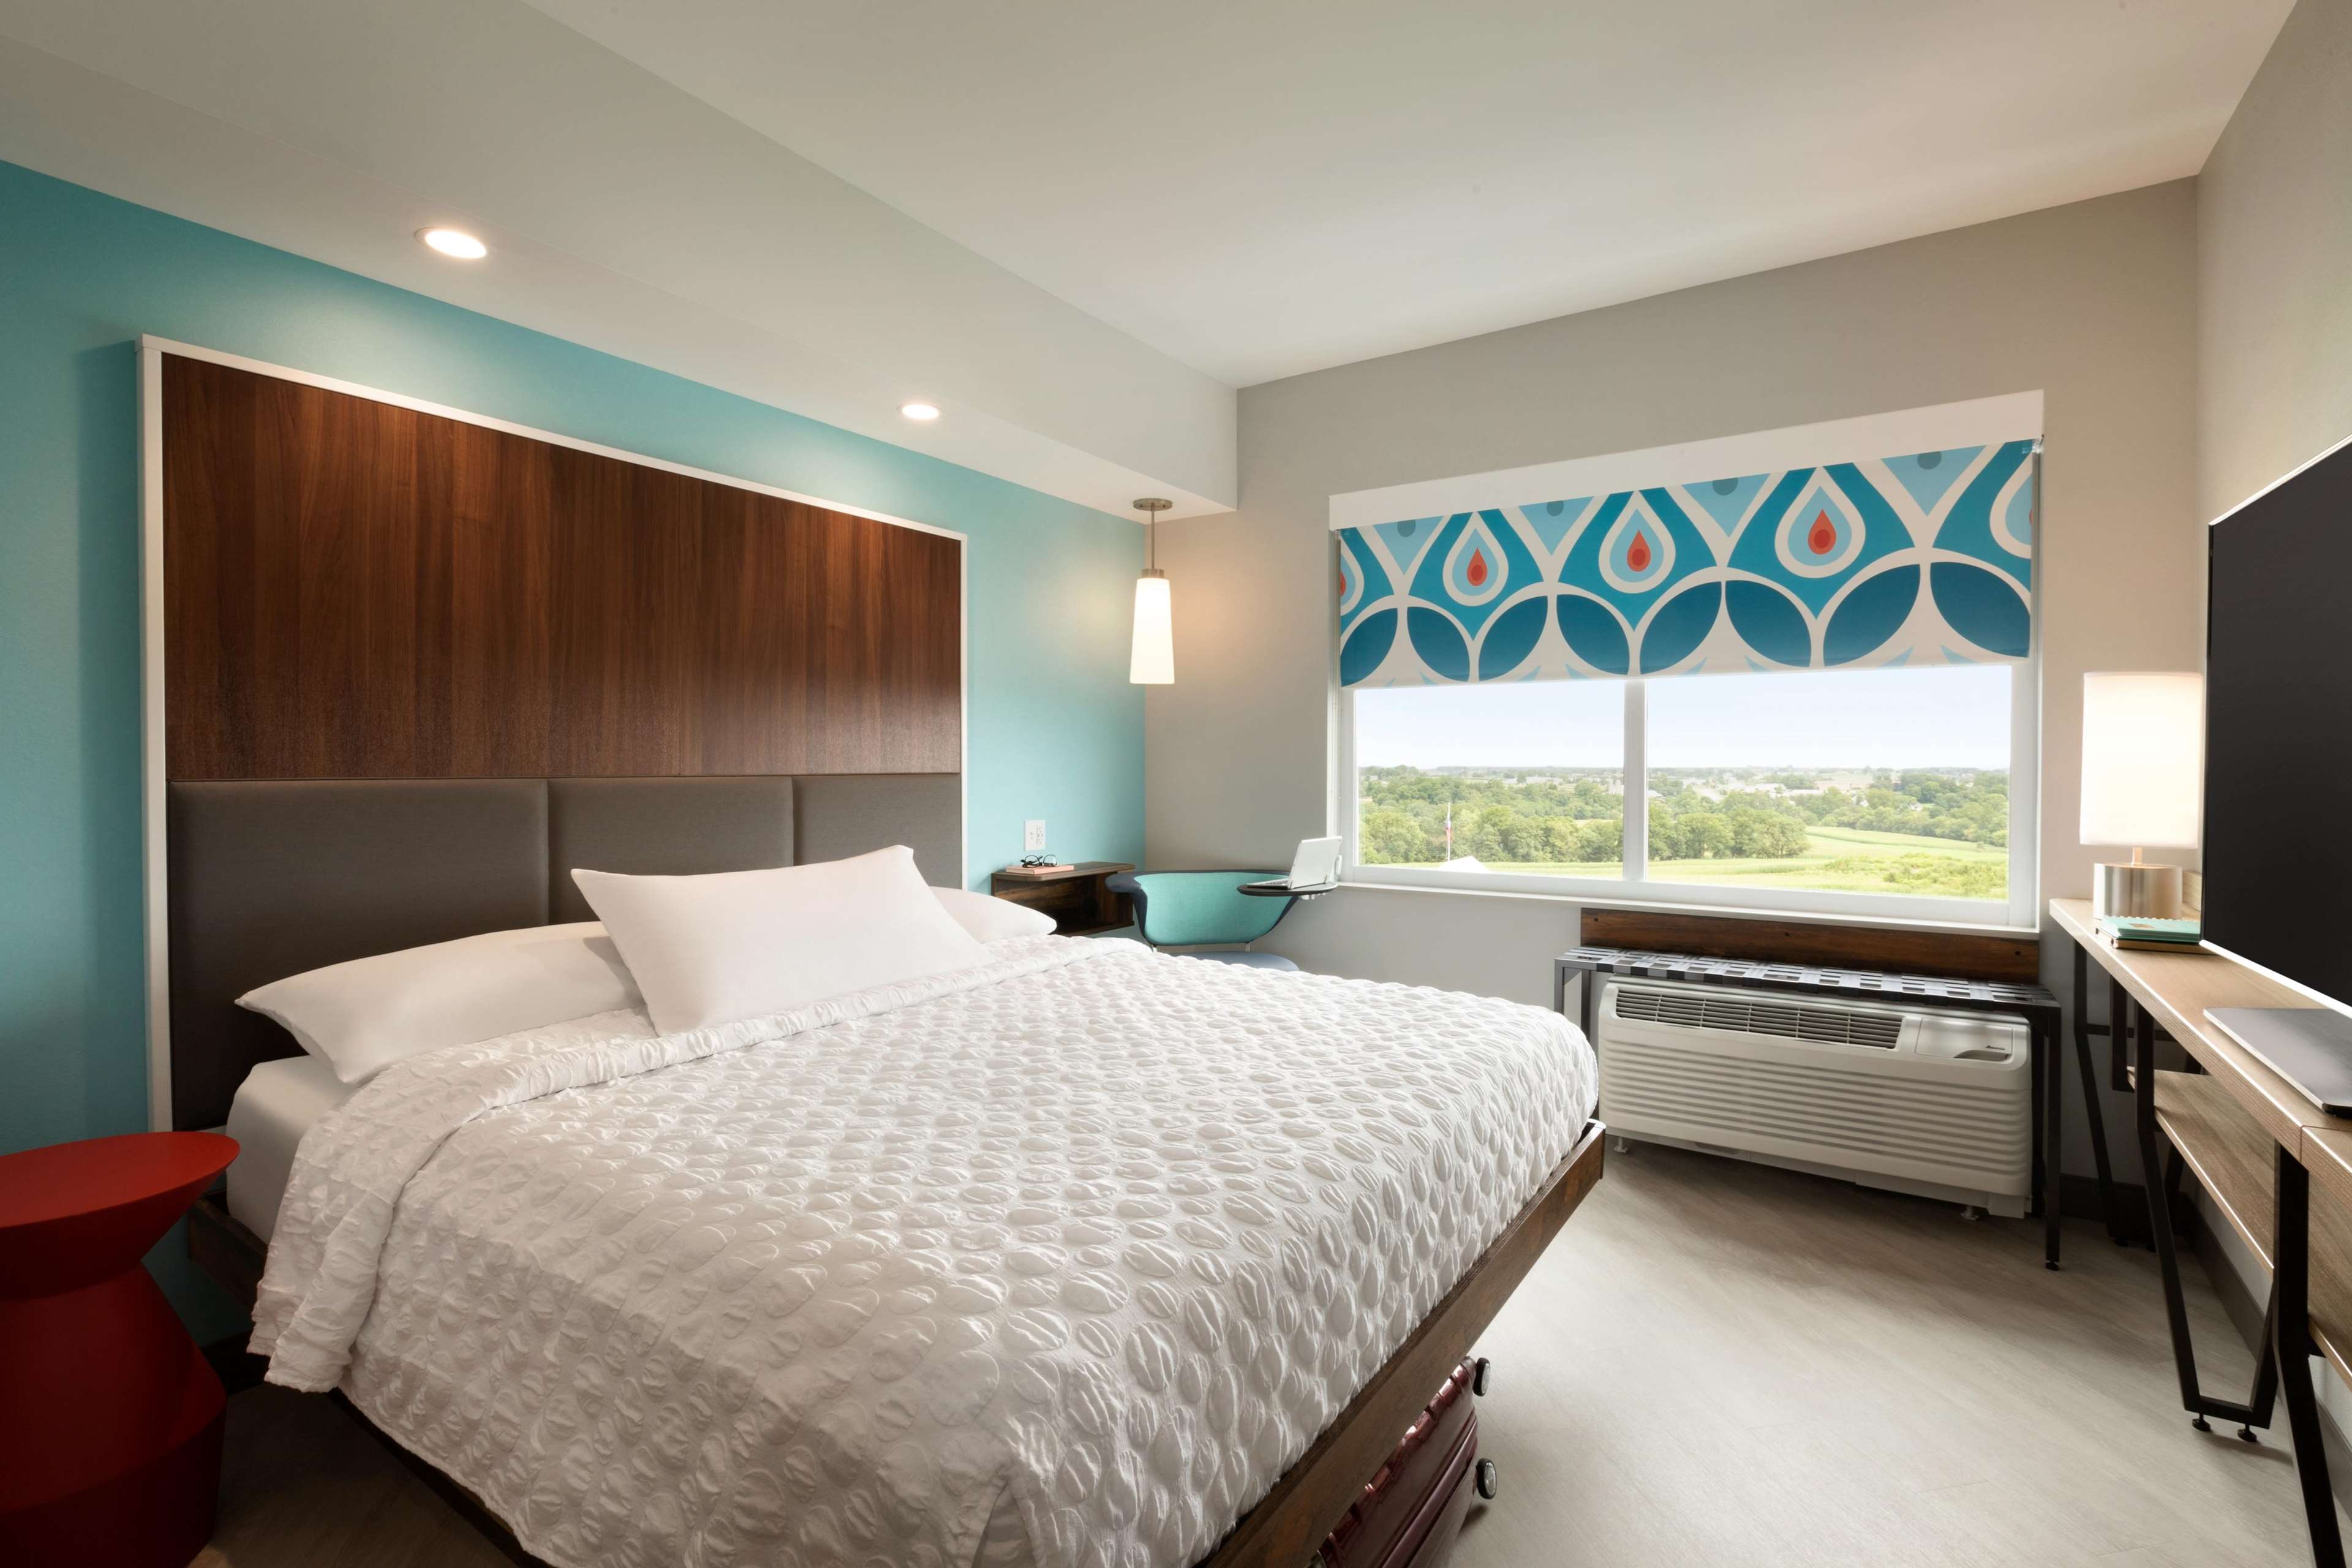 Tru By Hilton, stilski namještaj za hotelske sobe, prilagođavanje gostinjske sobe Istaknuta slika